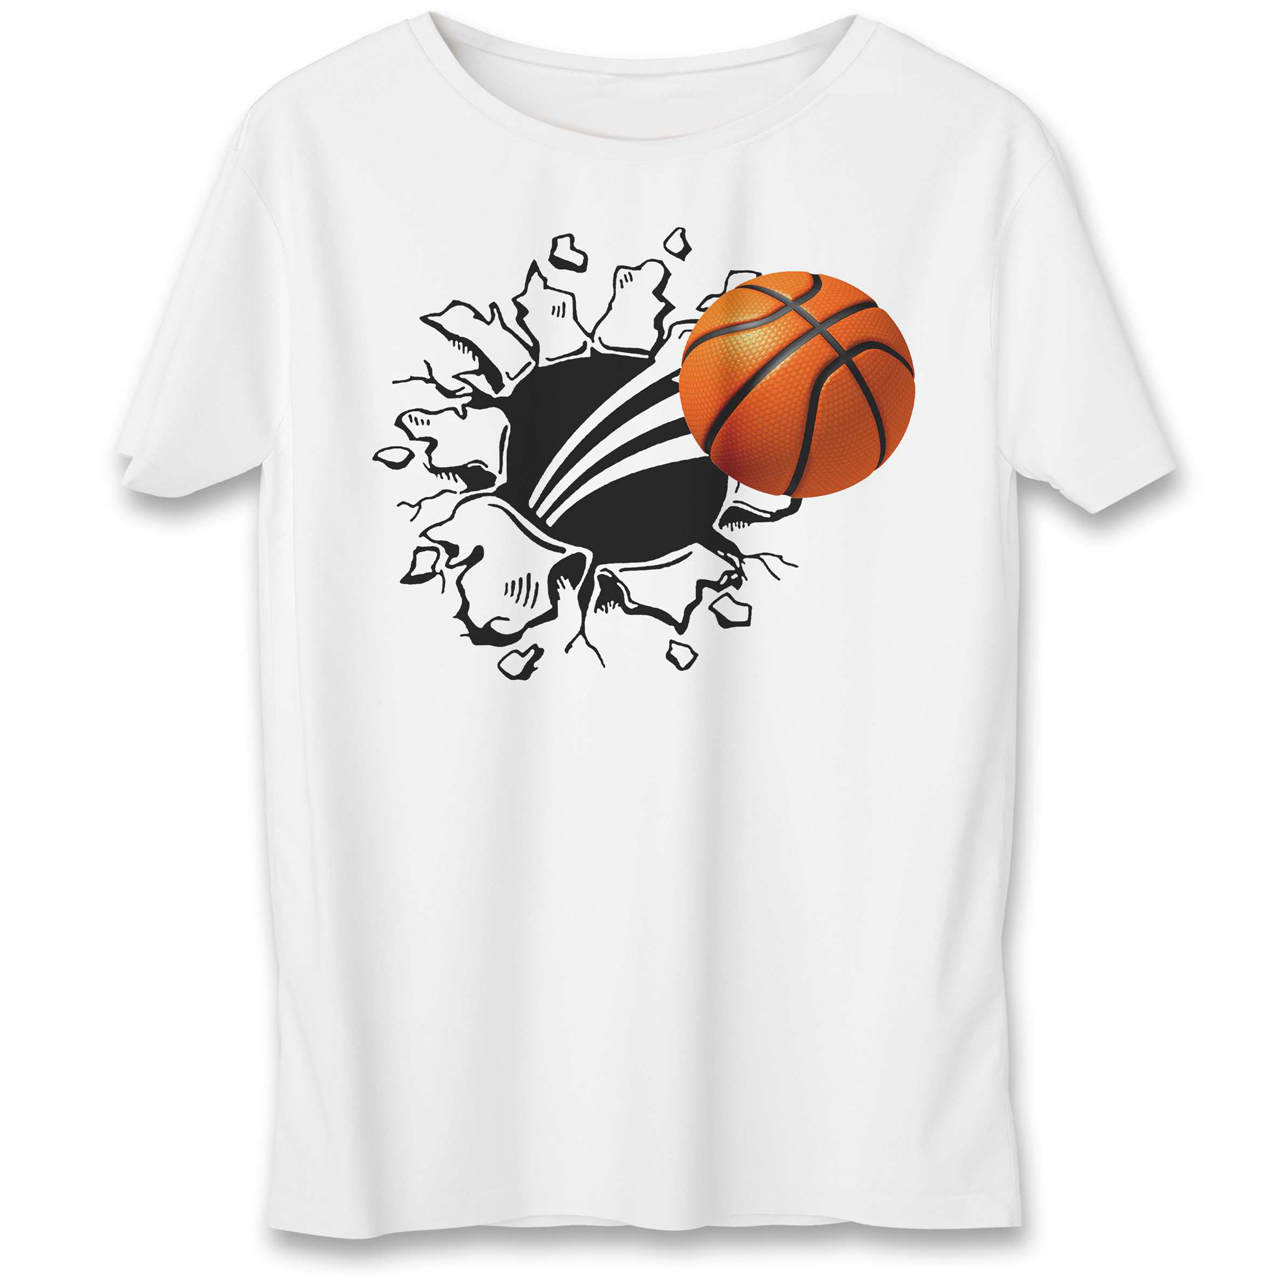 تی شرت یورپرینت به رسم طرح توپ بسکتبال کد 525